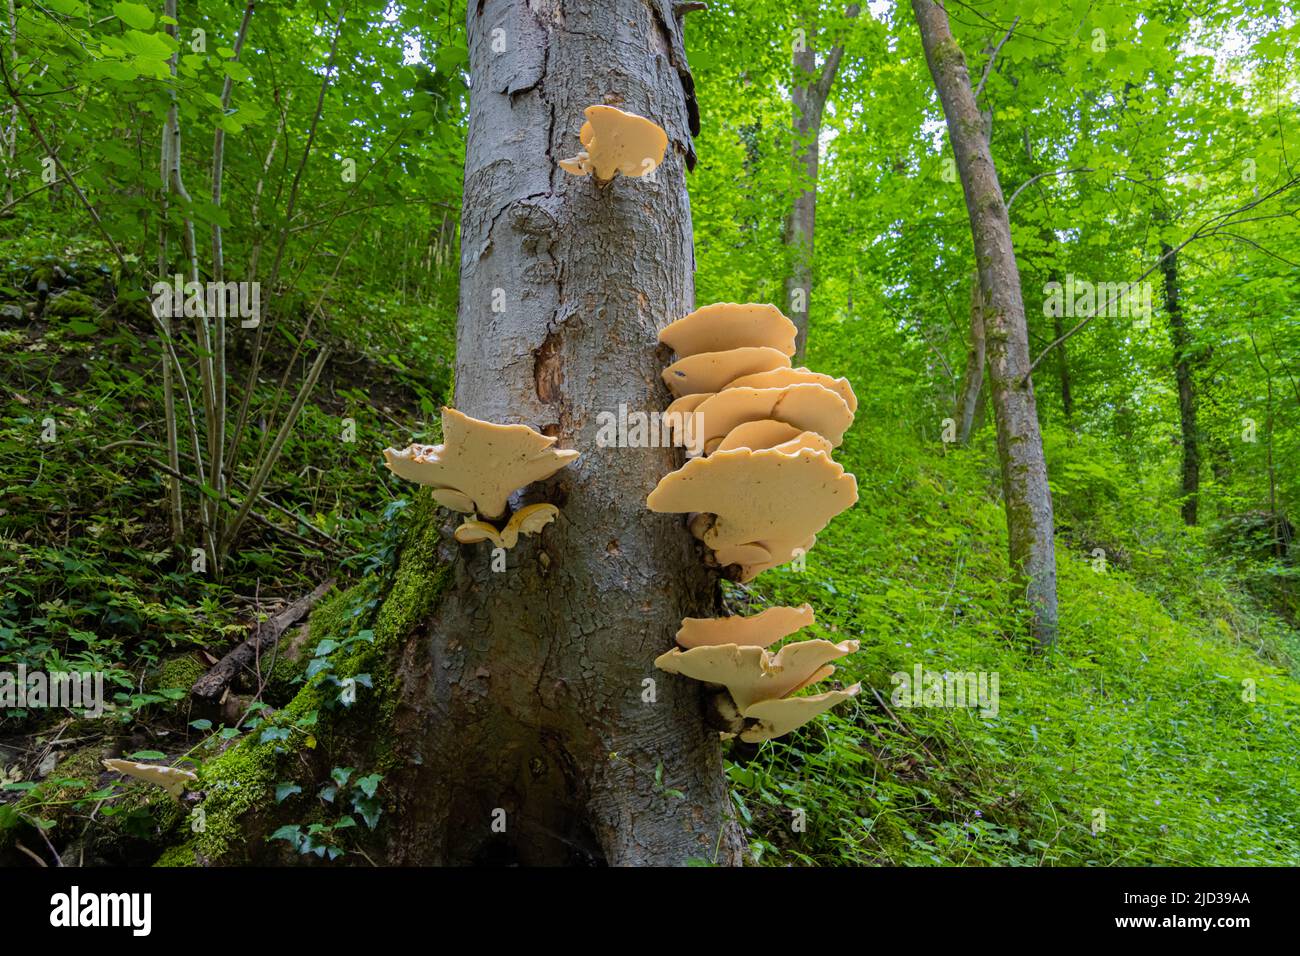 Orange bracket fungus growing on a tree, also called Laetiporus sulphureus Stock Photo